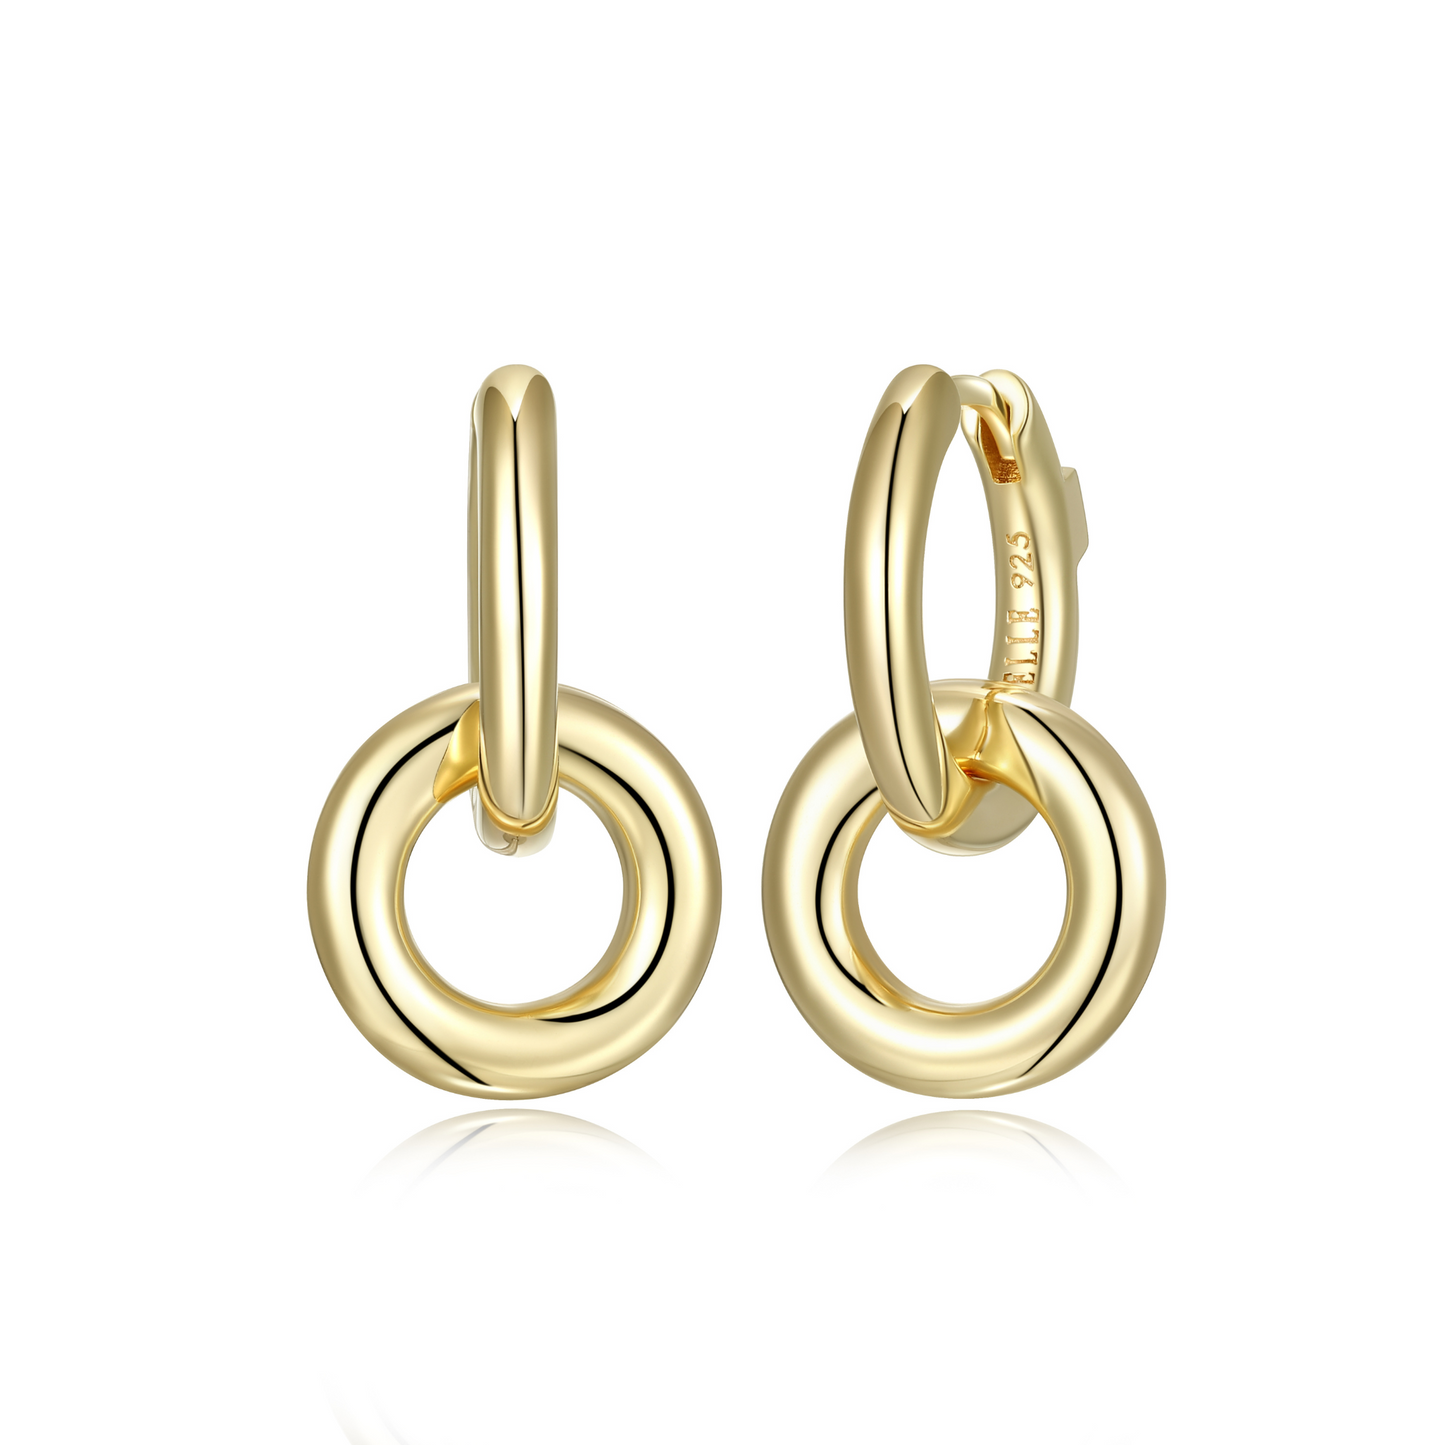 Elle Sterling Silver Gold Plated Circle Hoops Earrings